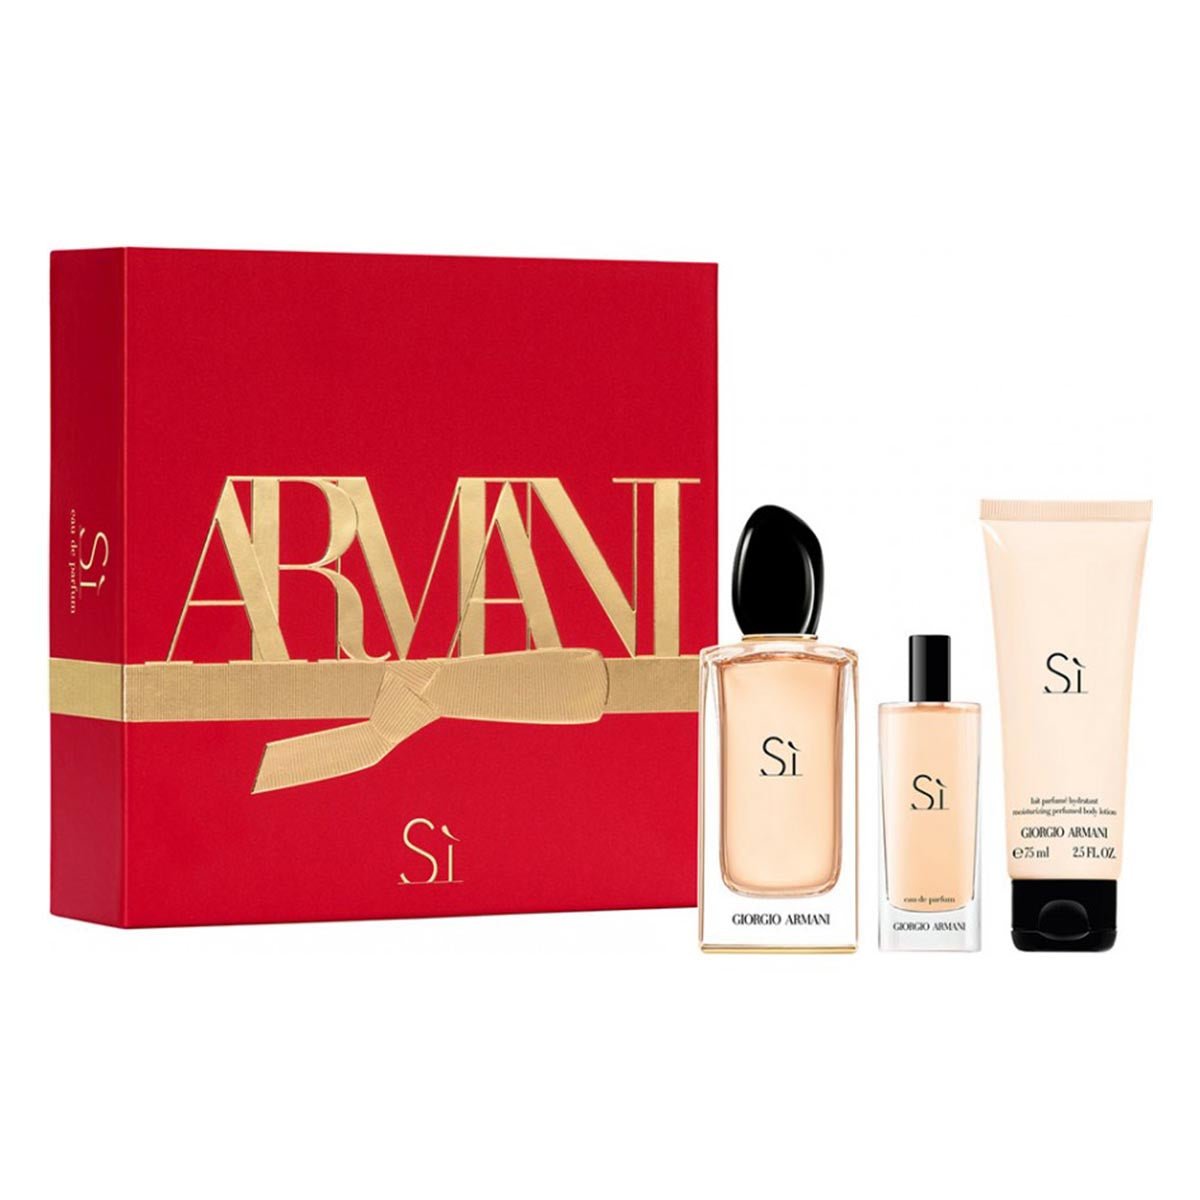 Giorgio Armani Si EDP Deluxe Gift Set | My Perfume Shop Australia